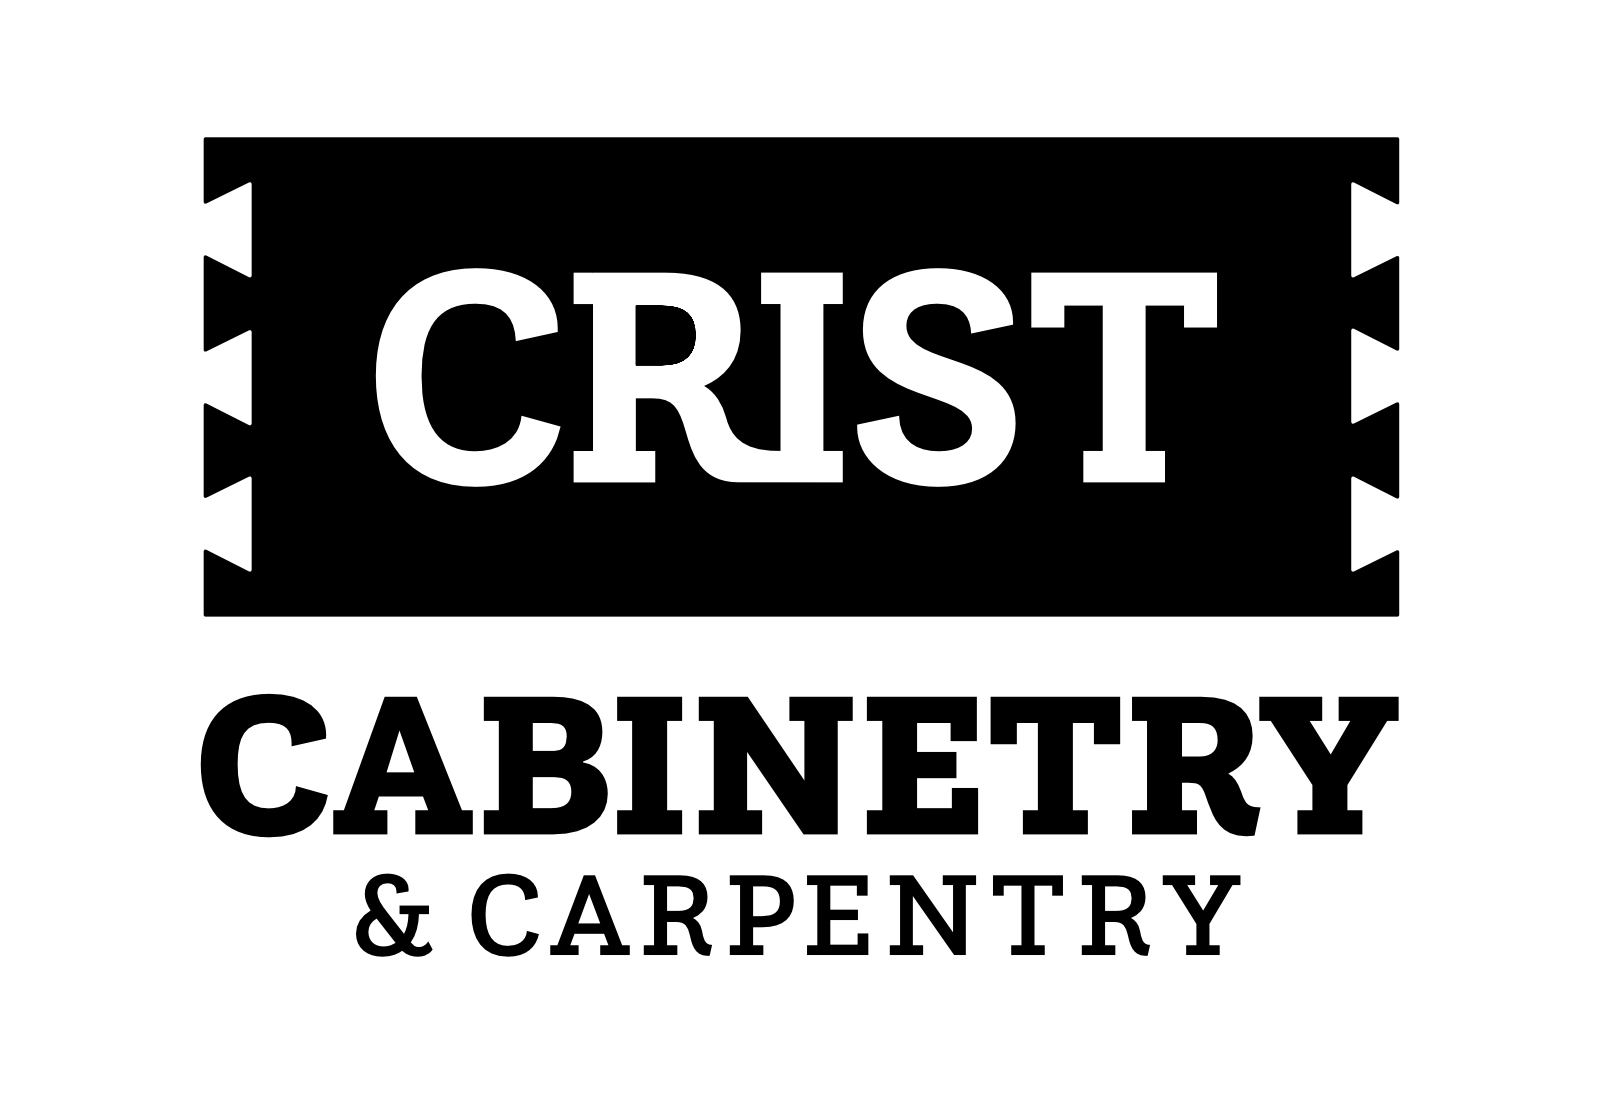 Crist Cabinetry & Carpentry logo.